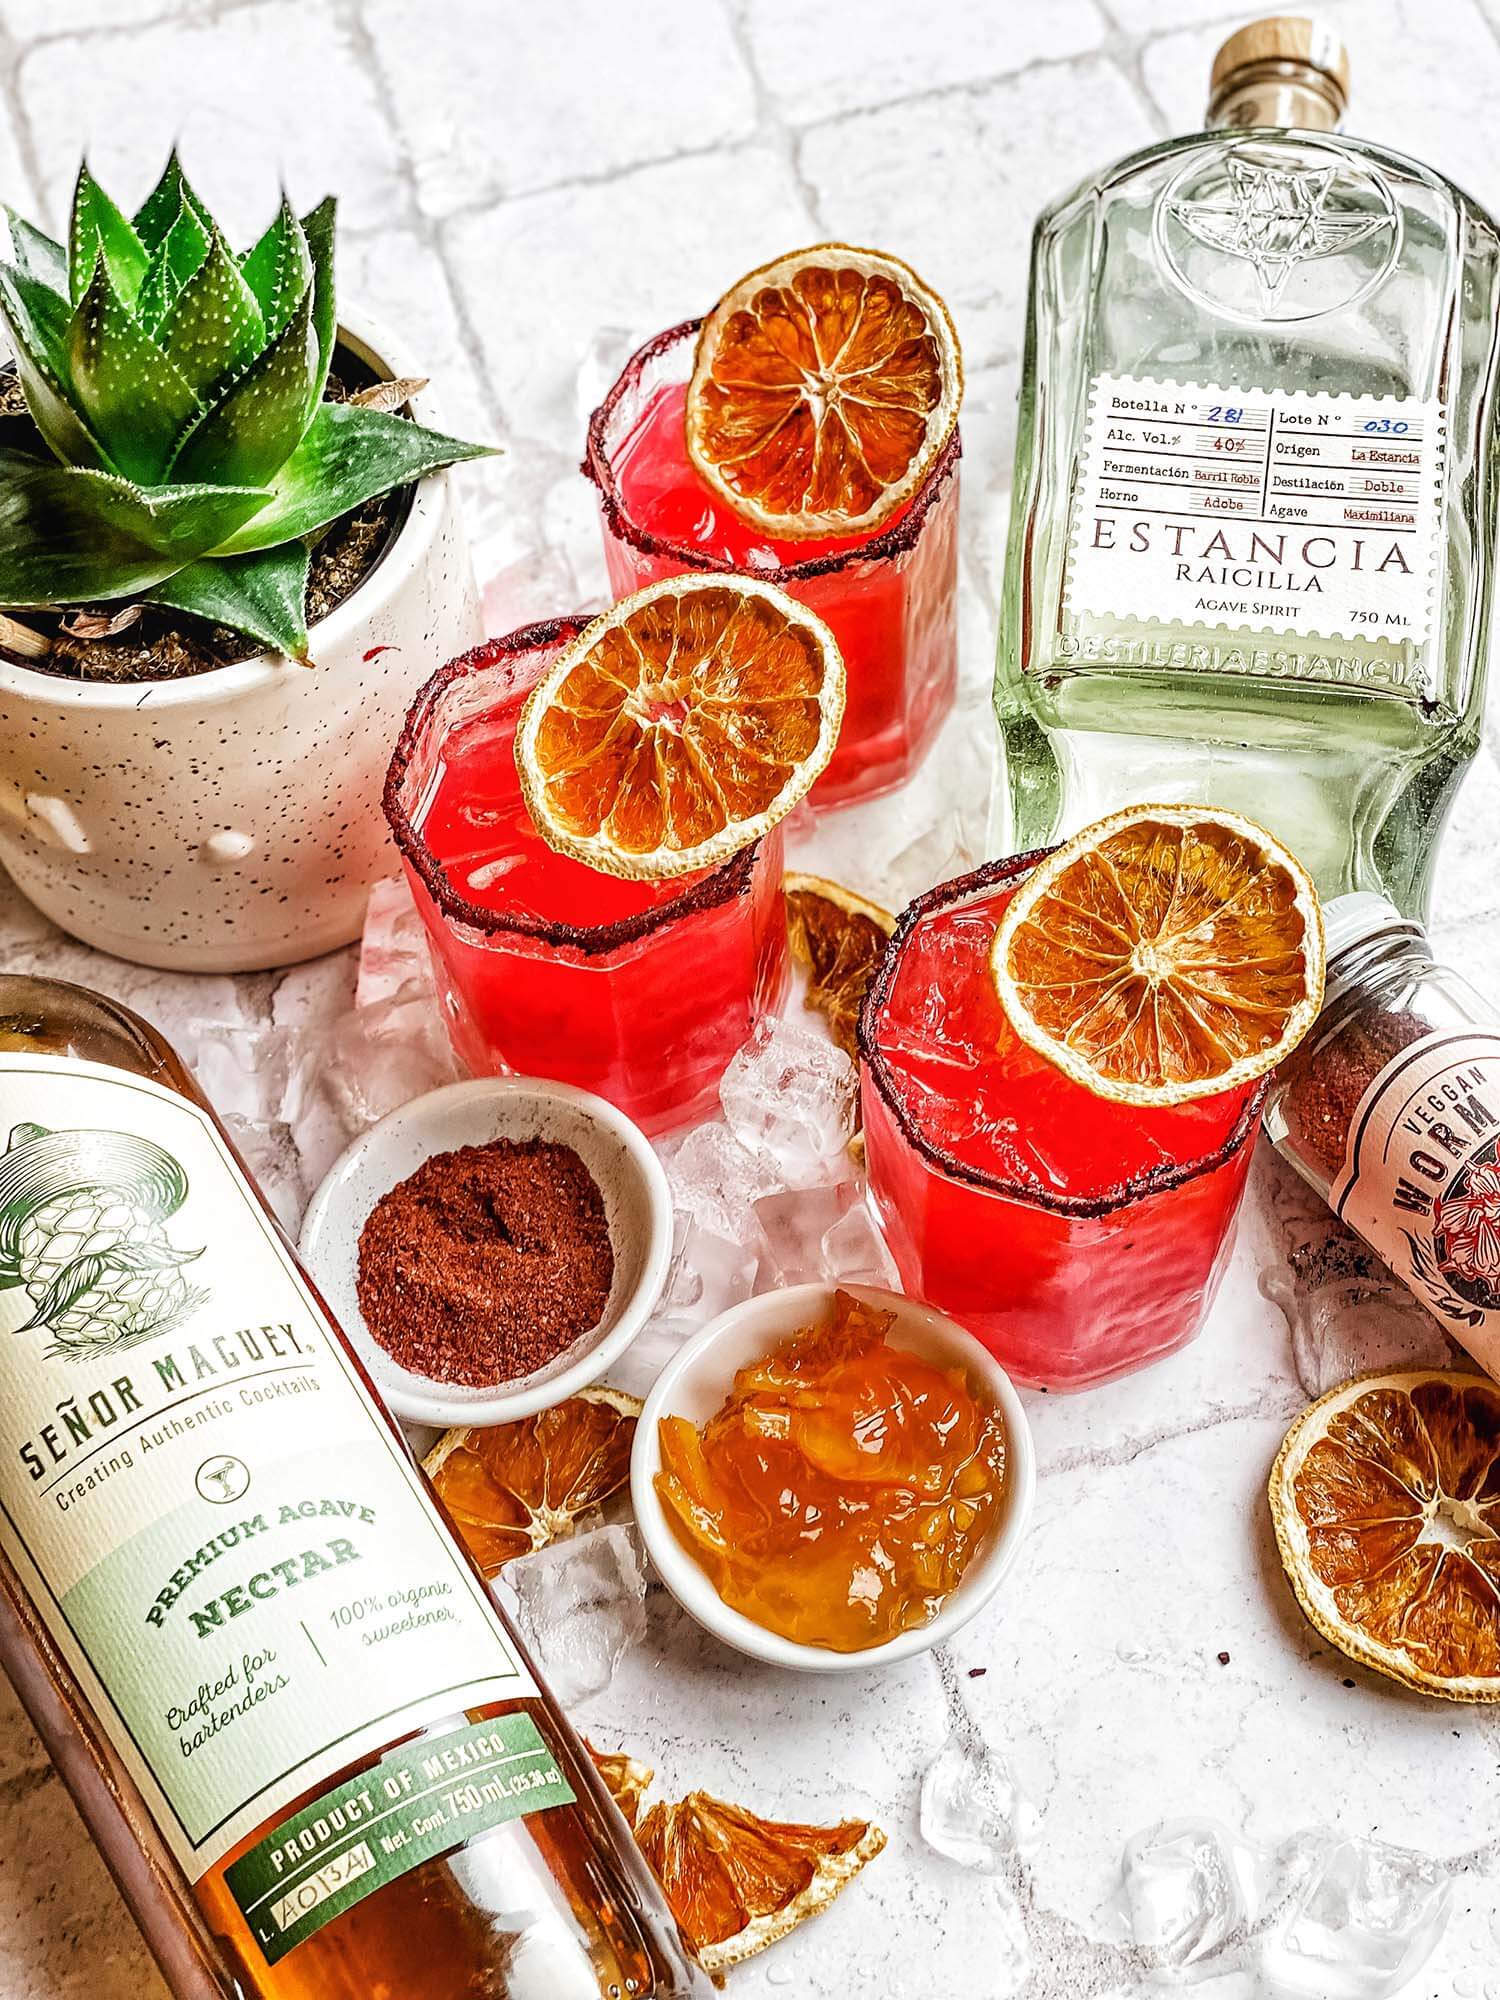 Featured image for “Marmalade Raicilla Margarita Cocktail Kit”